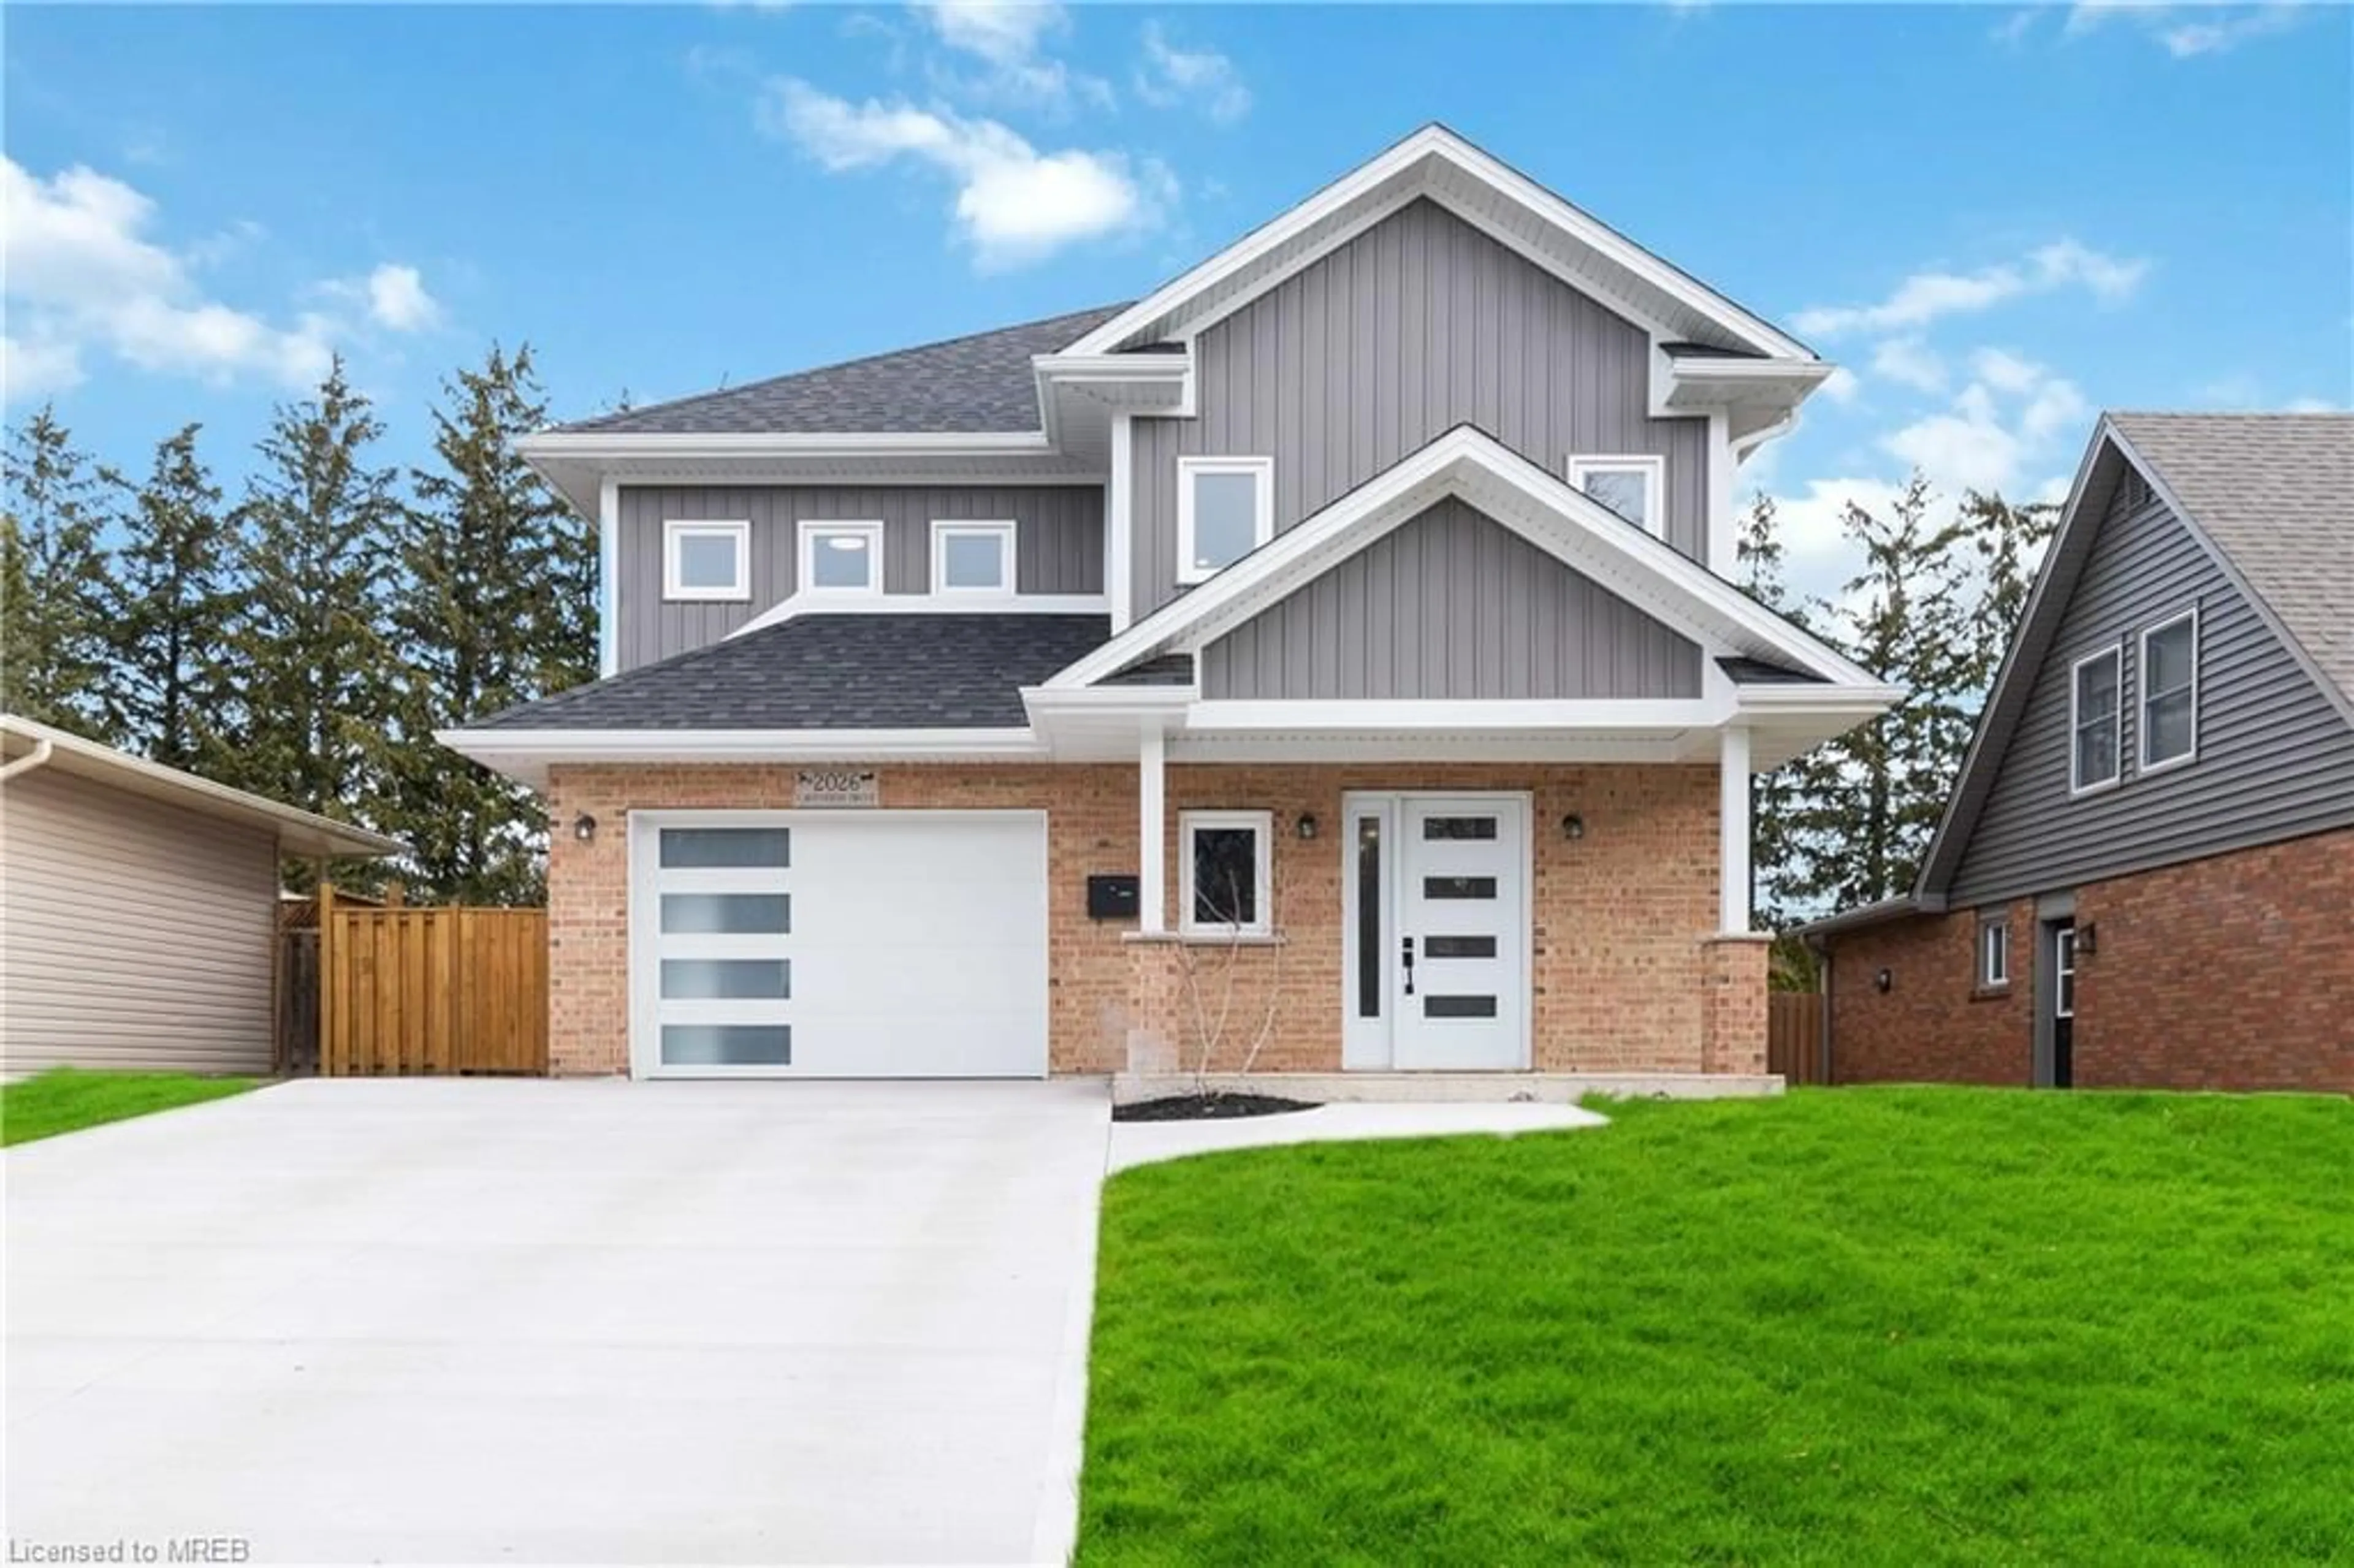 Home with brick exterior material for 2026 Cavendish Dr, Burlington Ontario L7P 1Y7